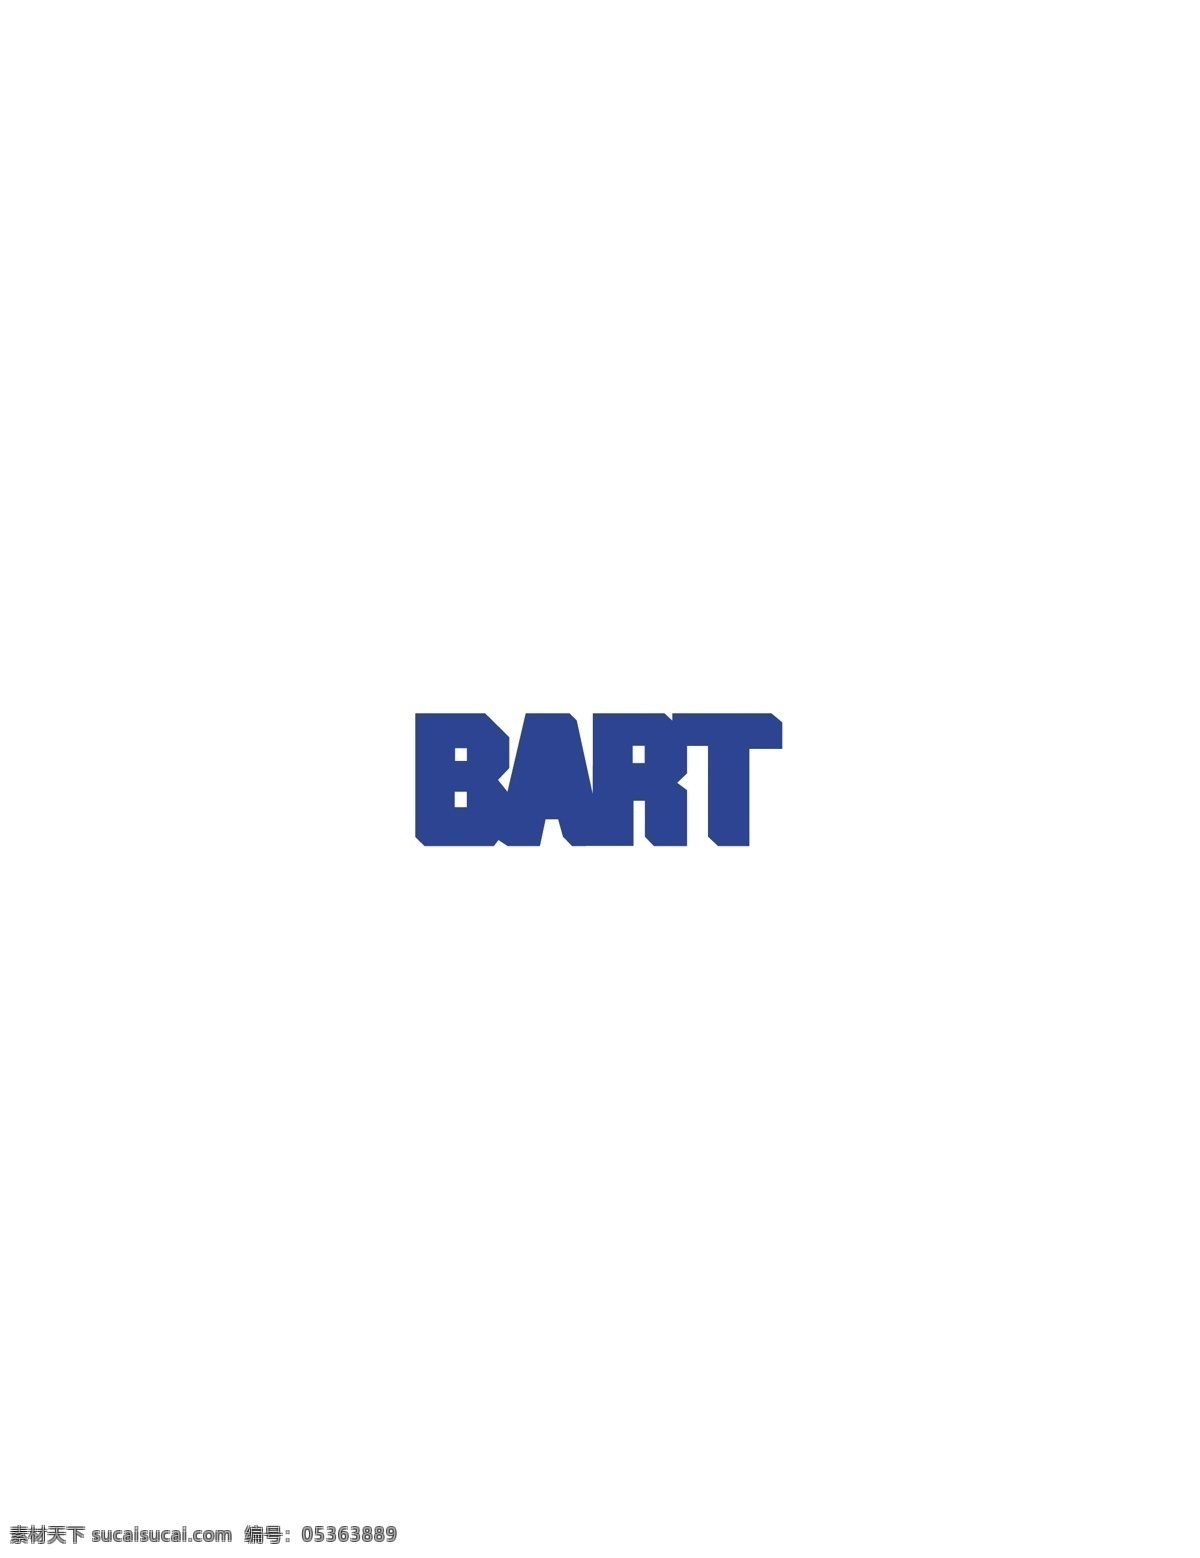 bart logo 设计欣赏 标志设计 欣赏 矢量下载 网页矢量 商业矢量 logo大全 红色